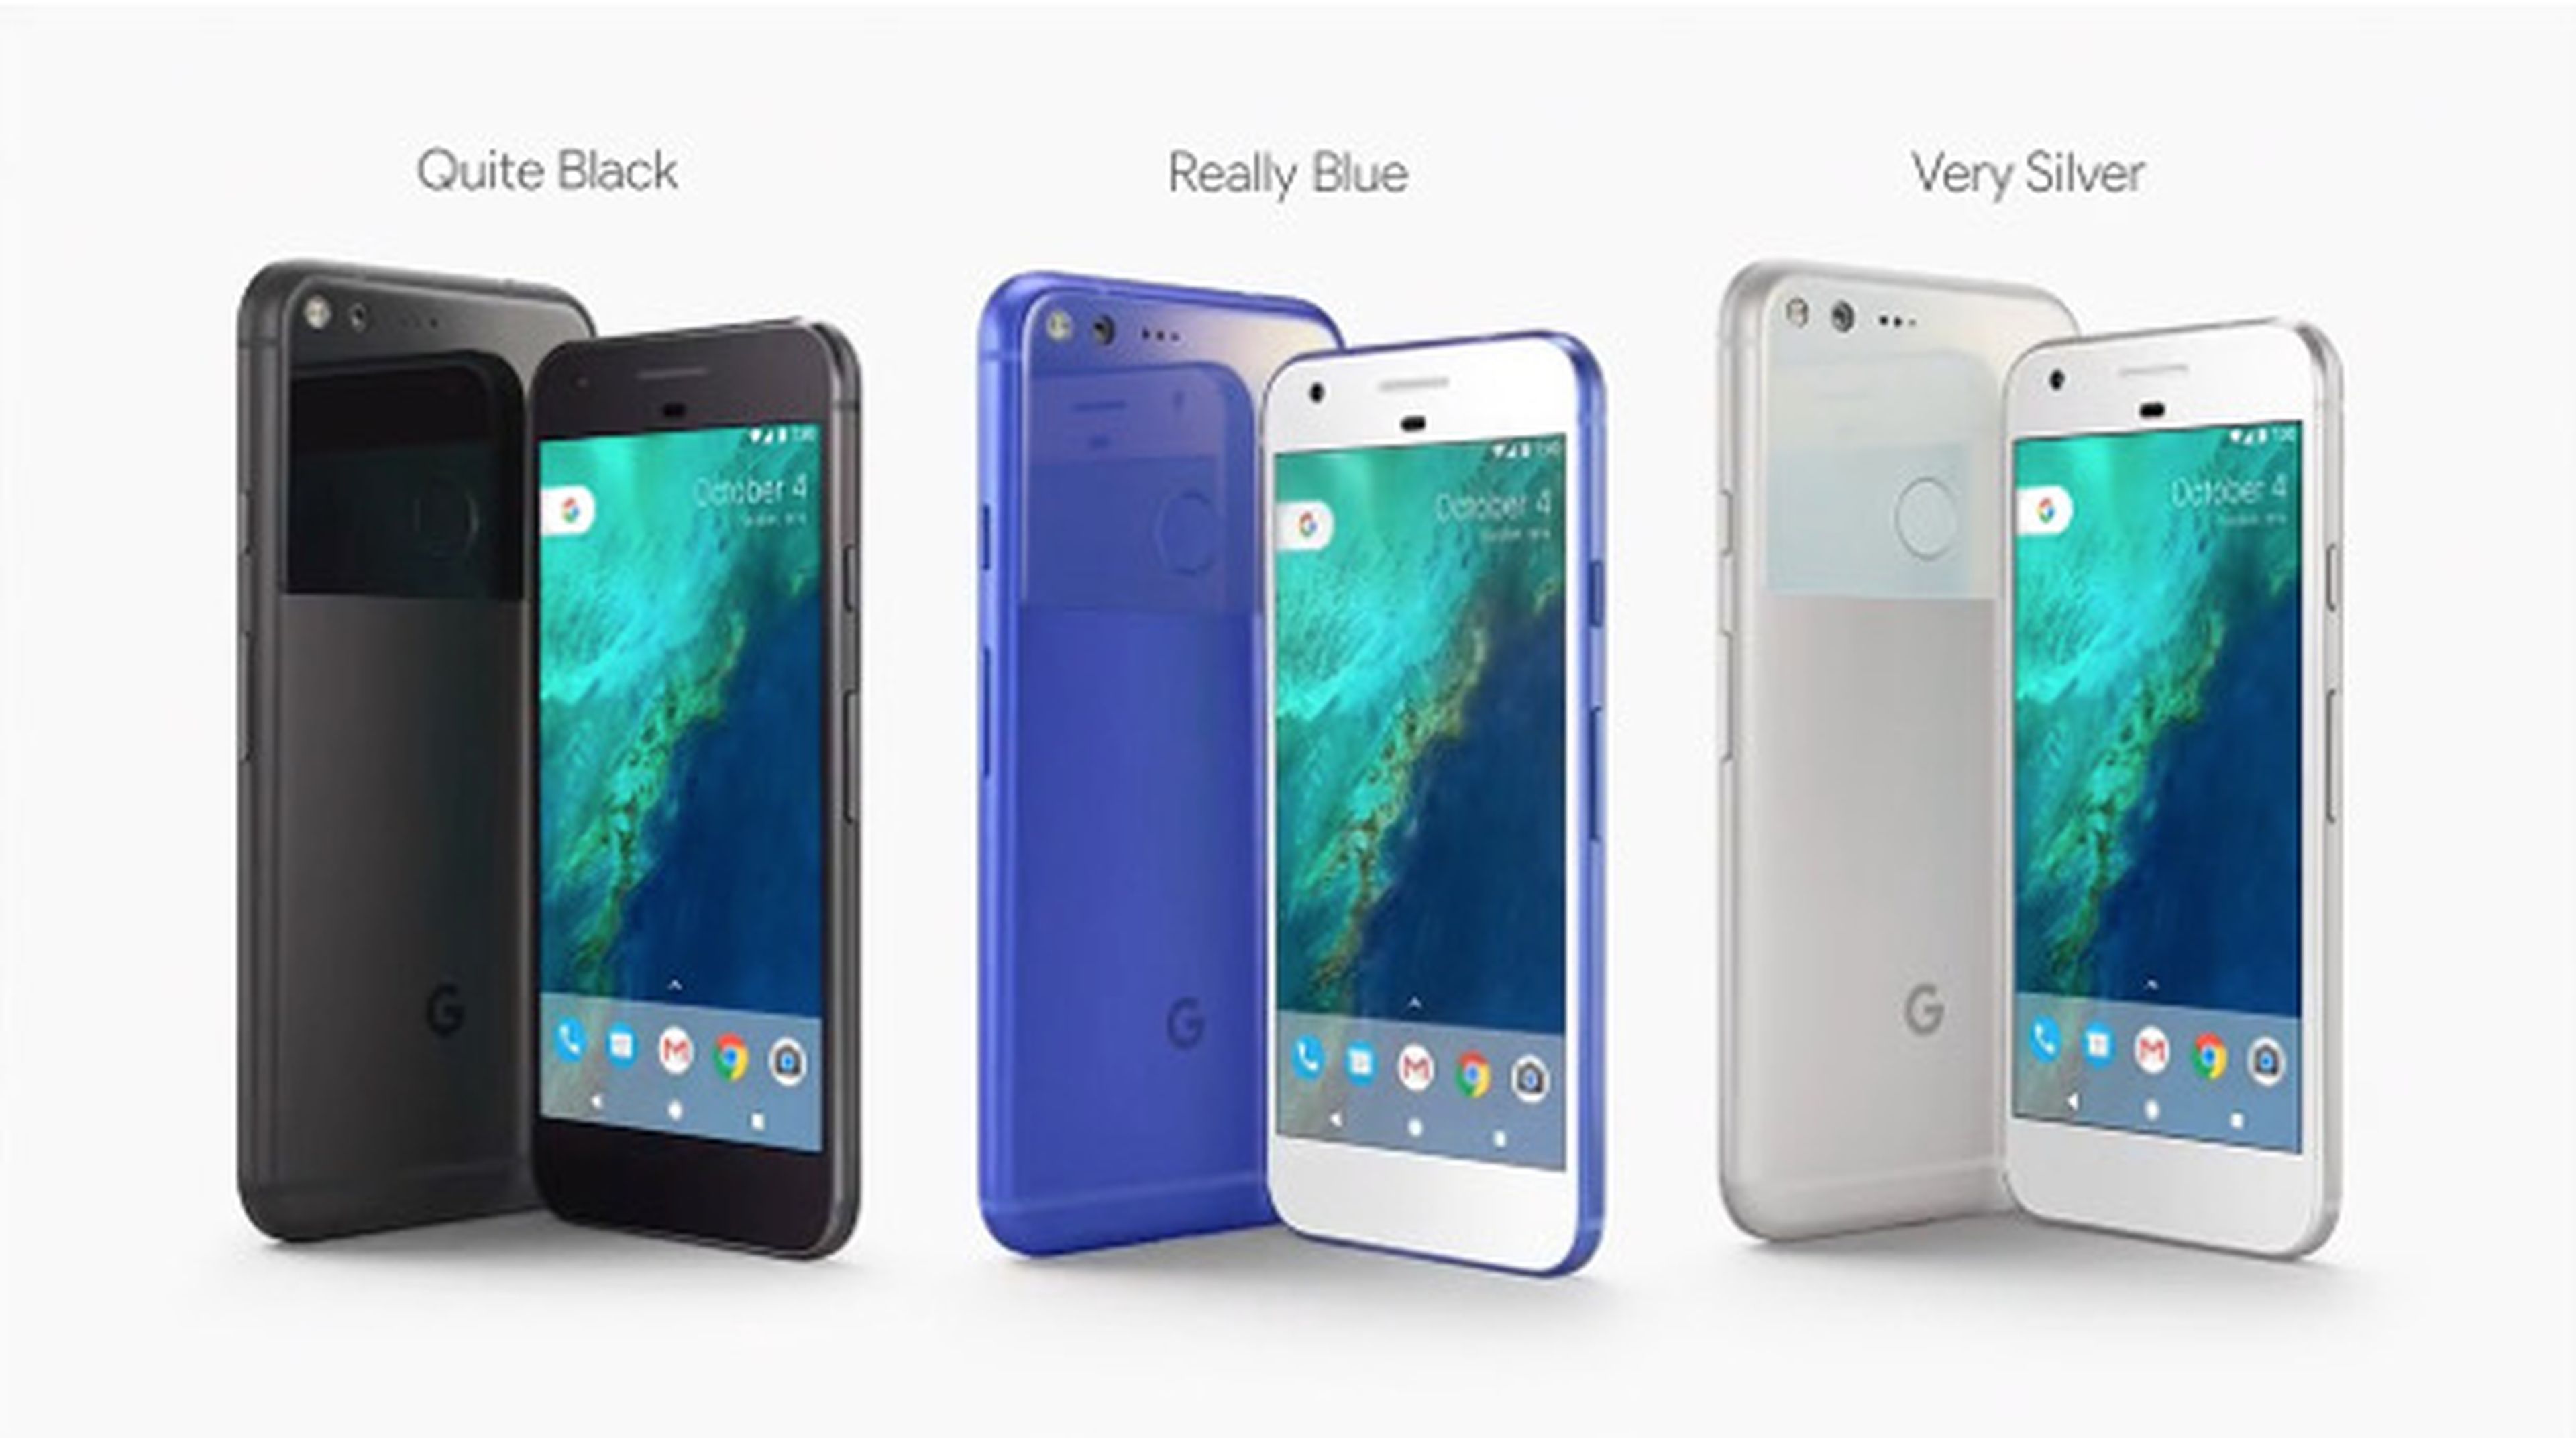 Google Pixel: características a la altura de los mejores móviles